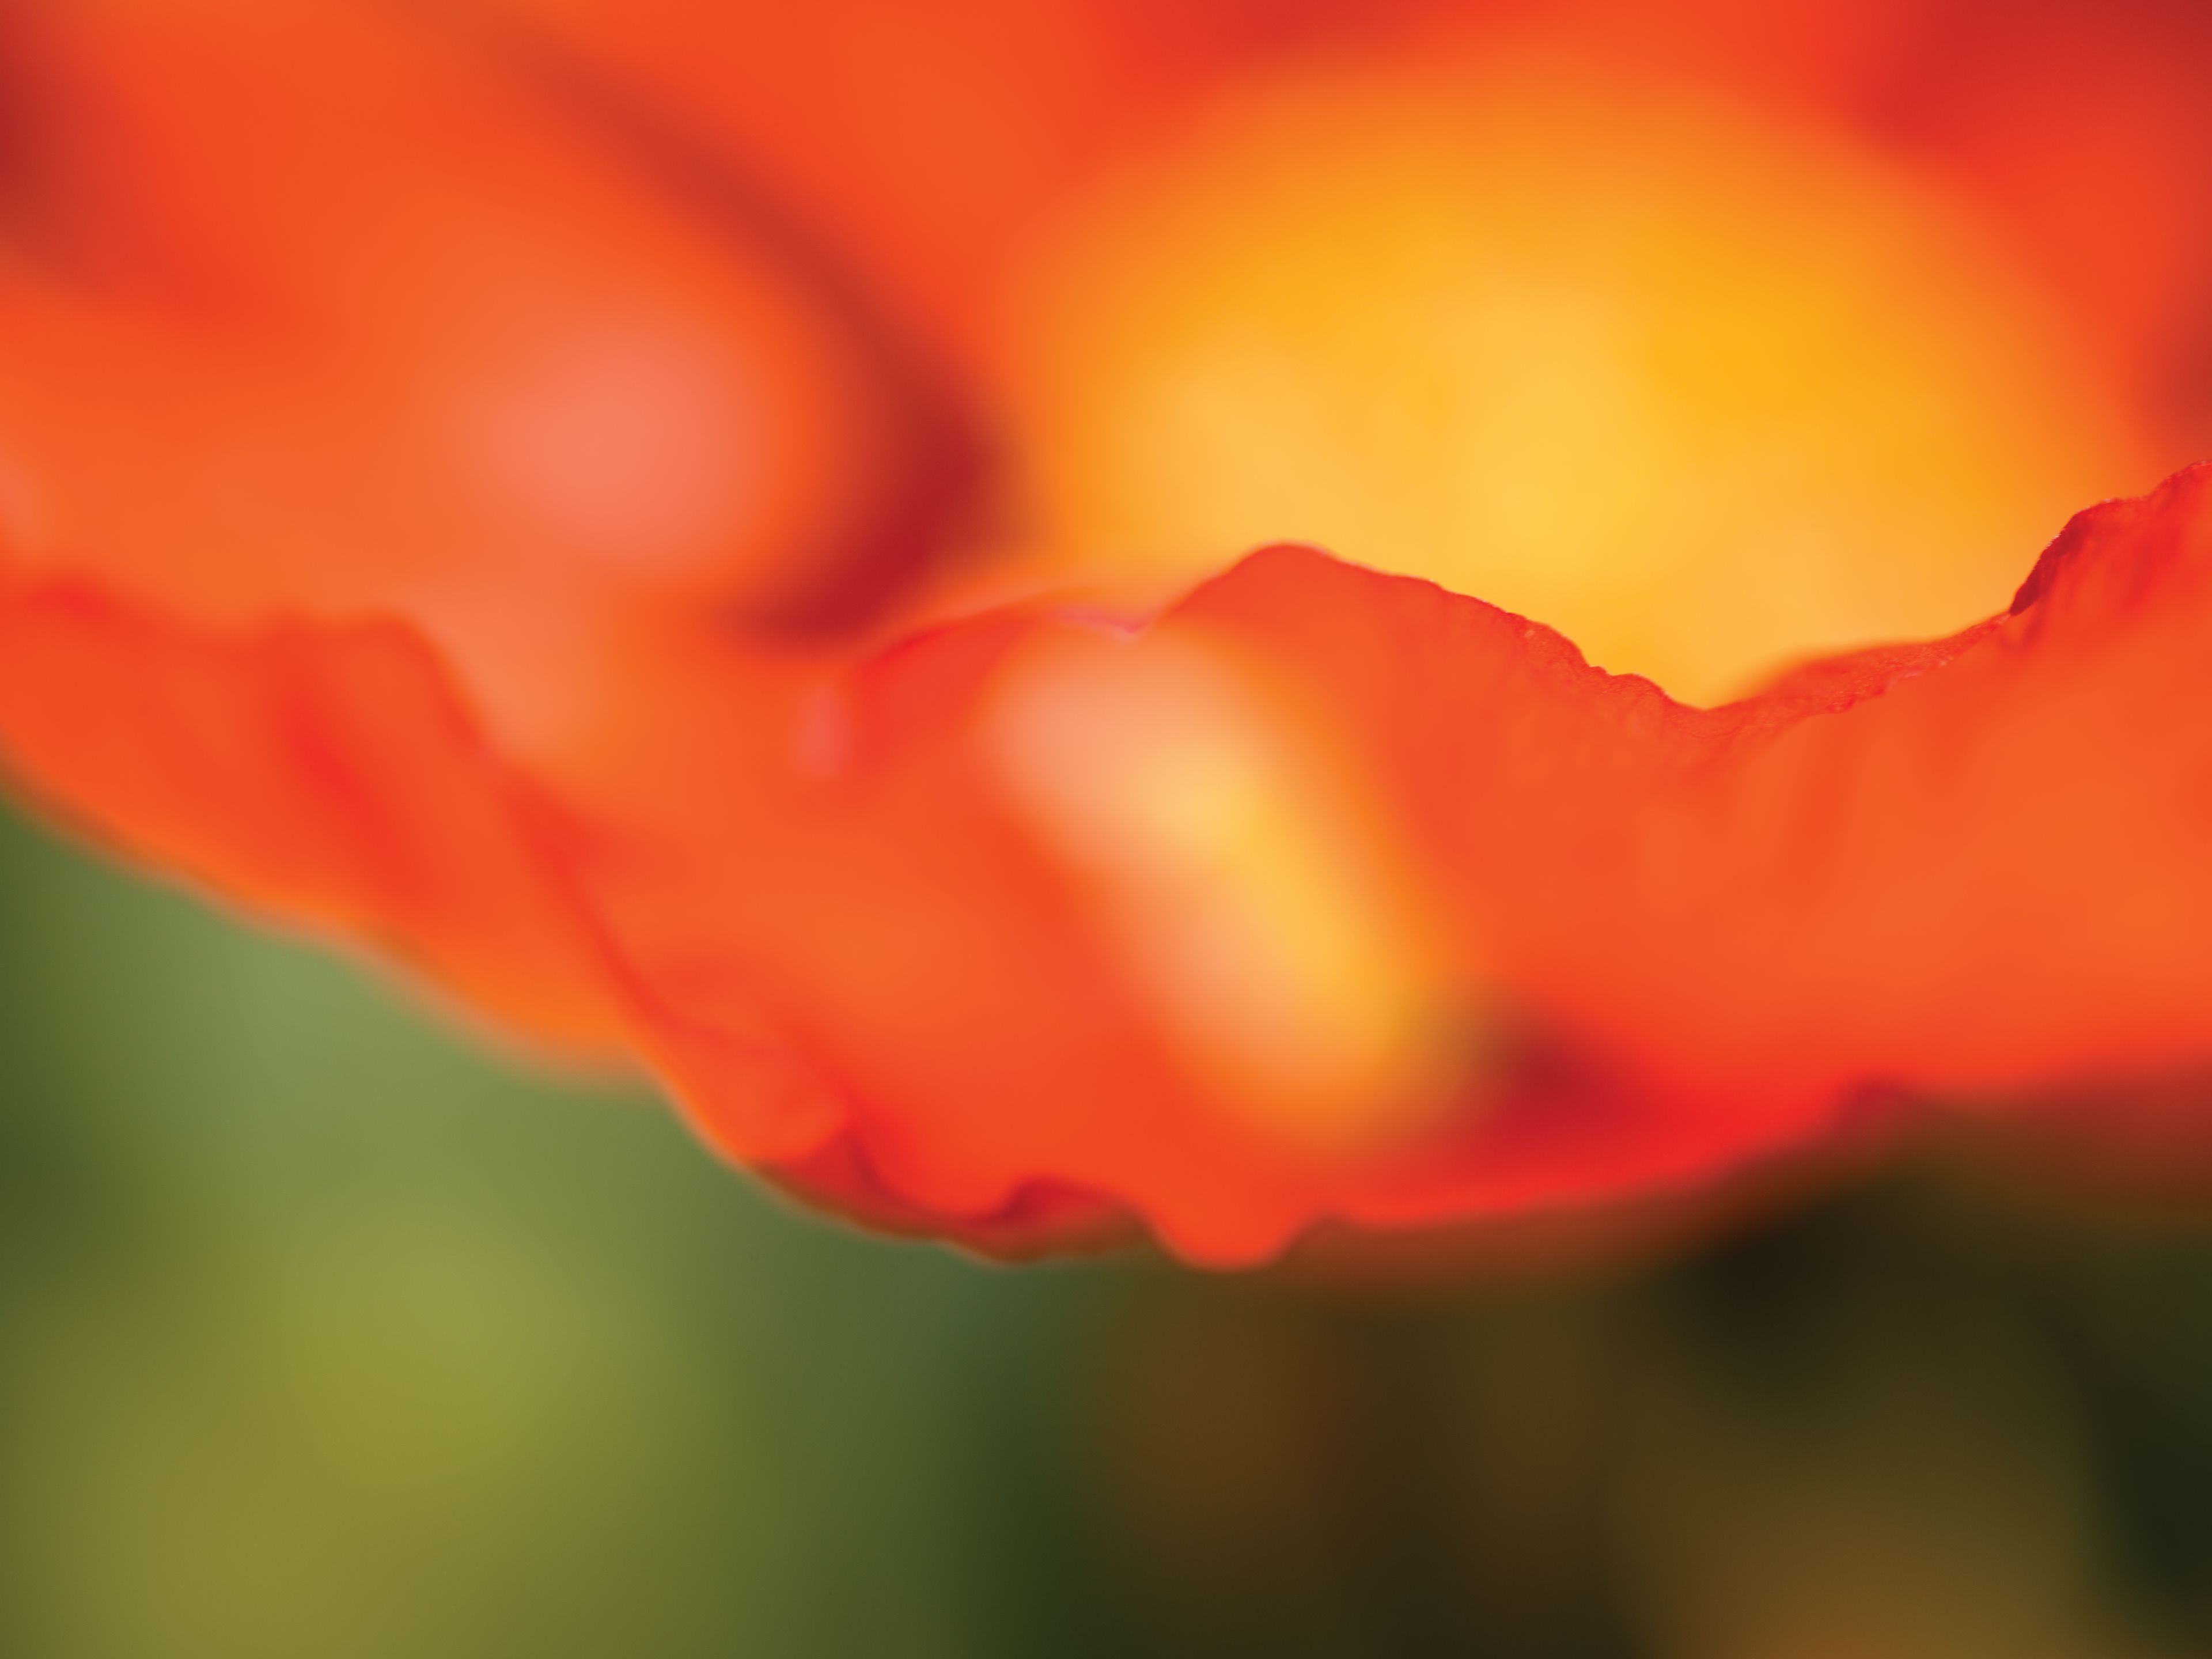 The tip of a petal on an orange flower.